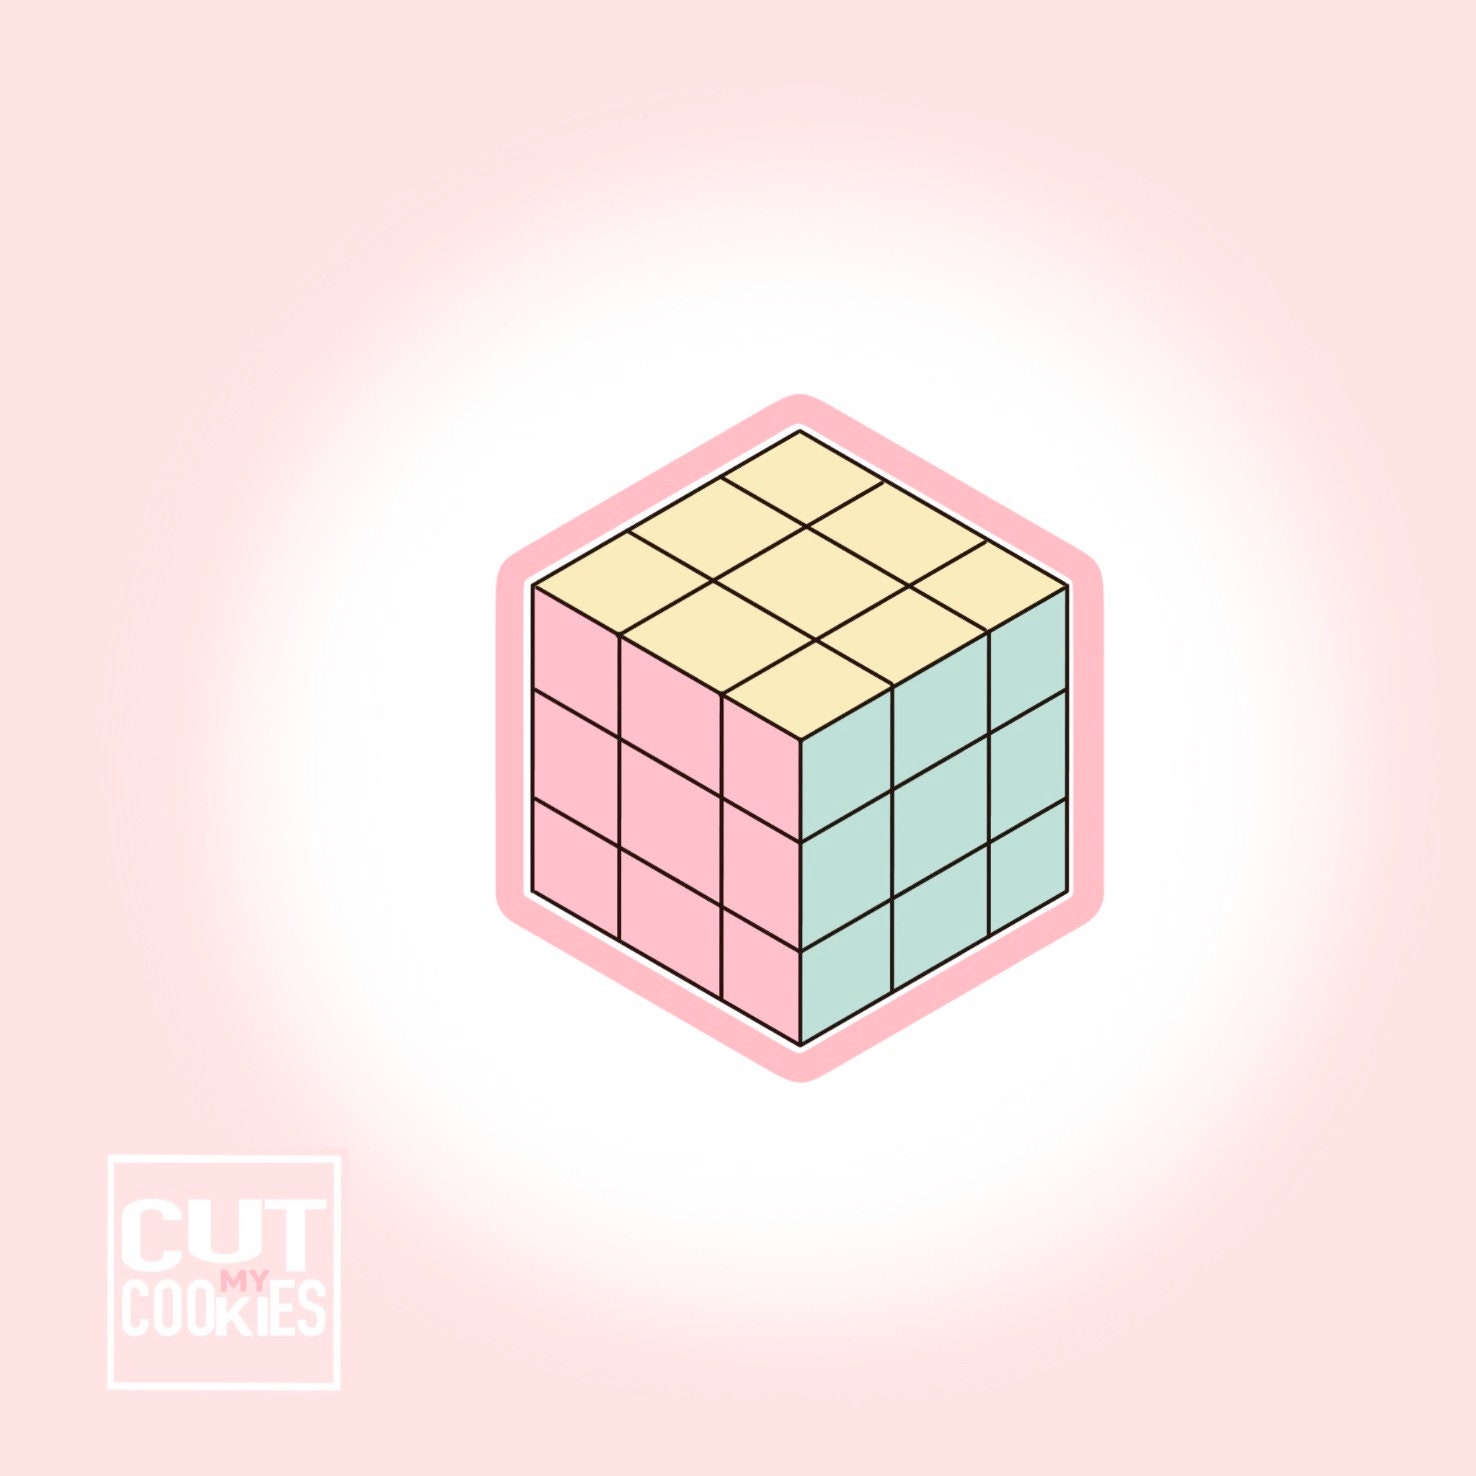 Magic cube -  France